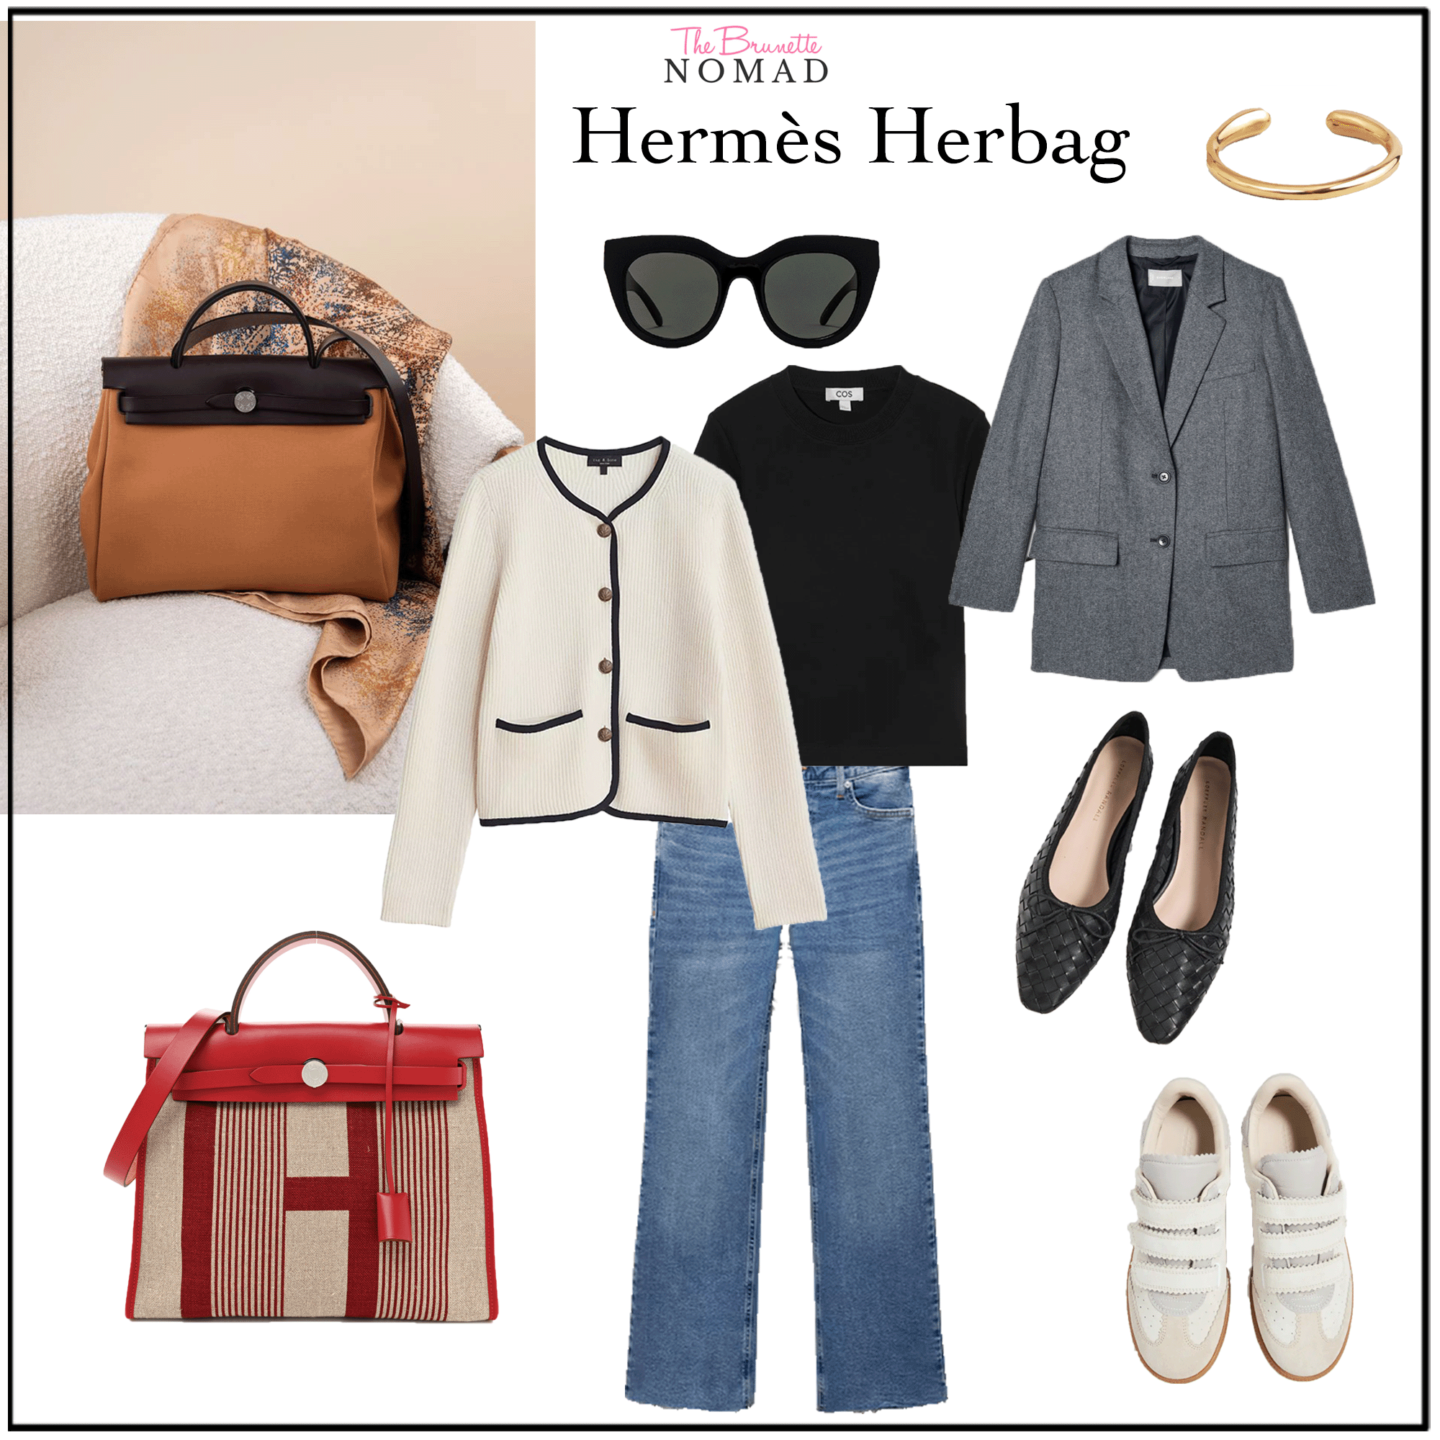 Hermes herbag outfit inspiration_the brunette nomad